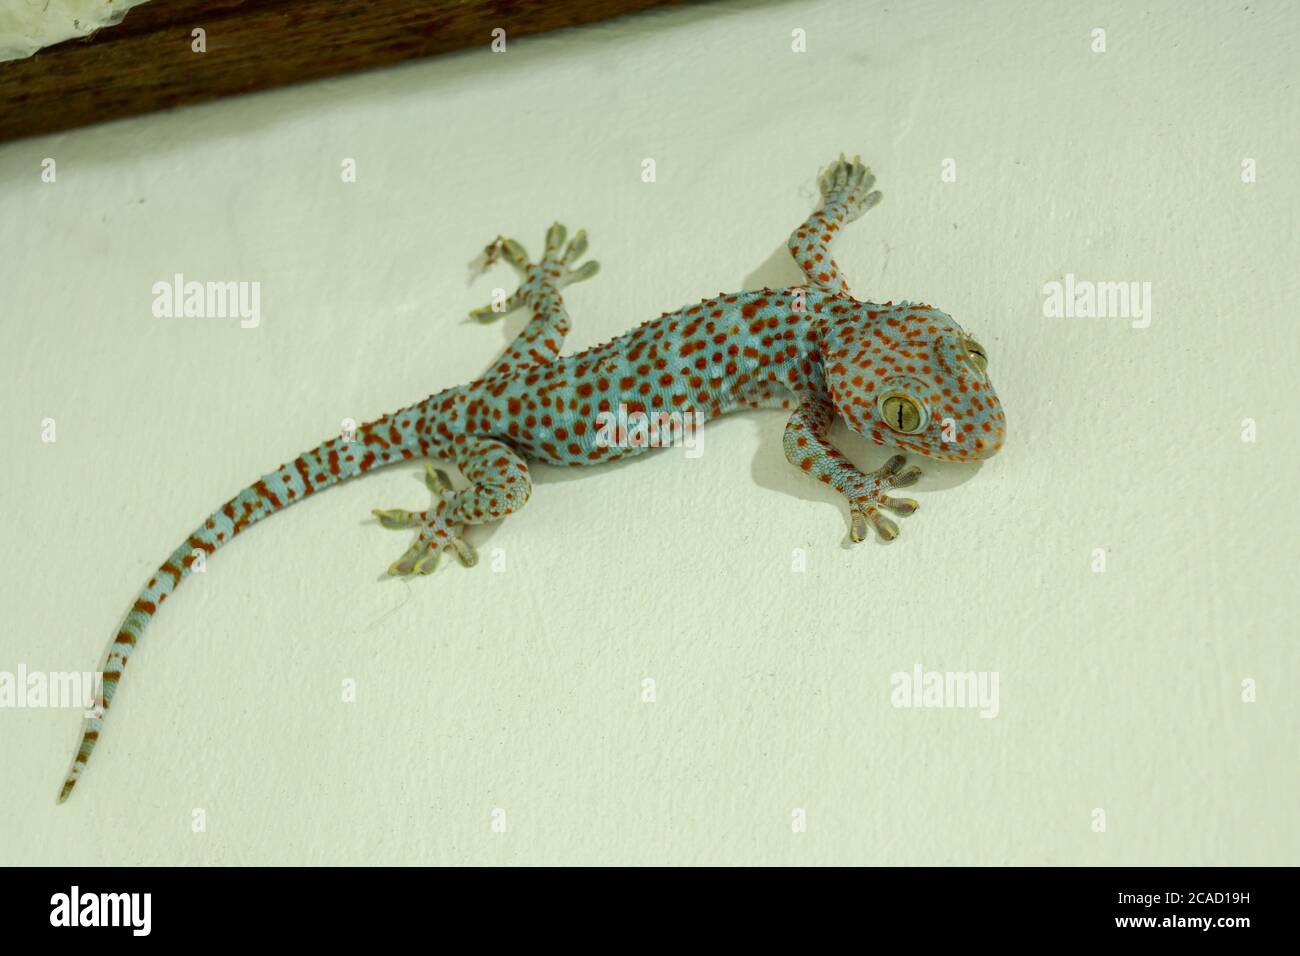 Tokay gecko - Gekko gecko in front of a white background Stock Photo